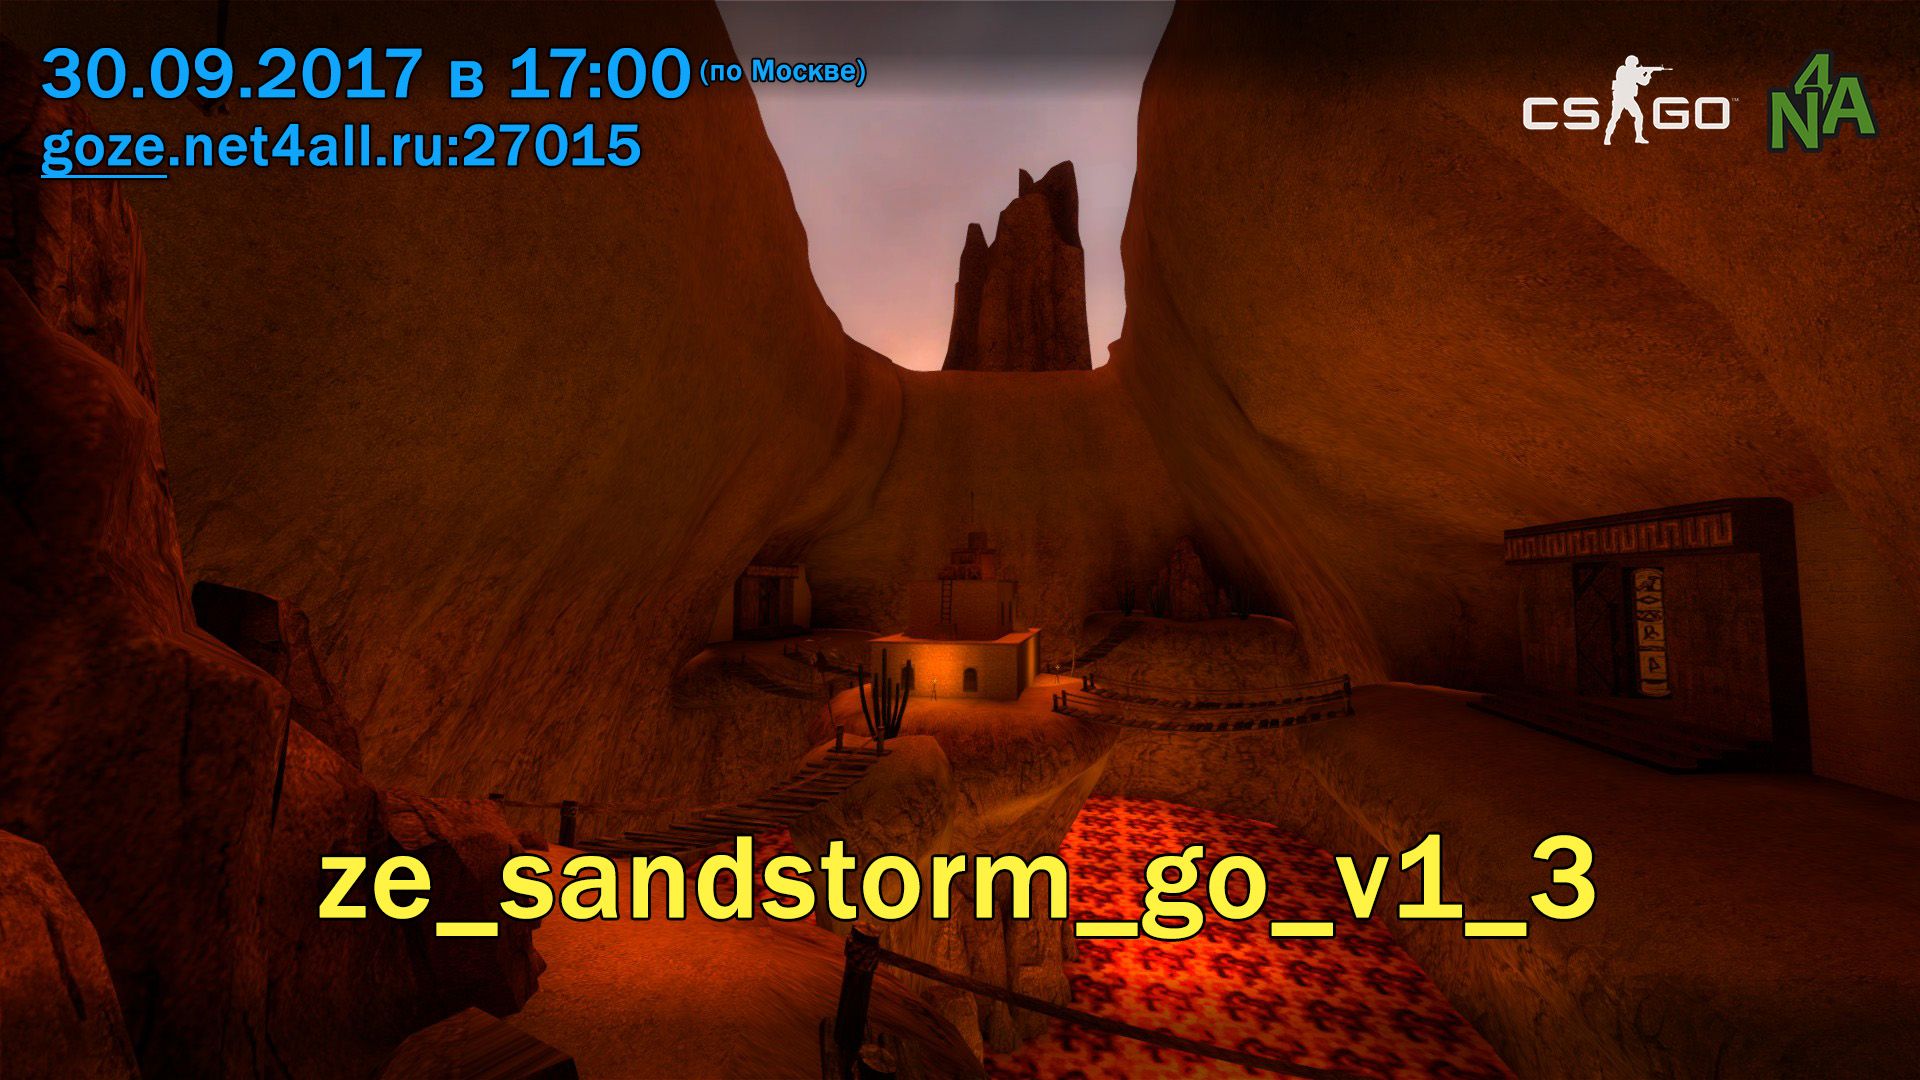 event_csgo_ze_sandstorm_go_v1_3.jpg